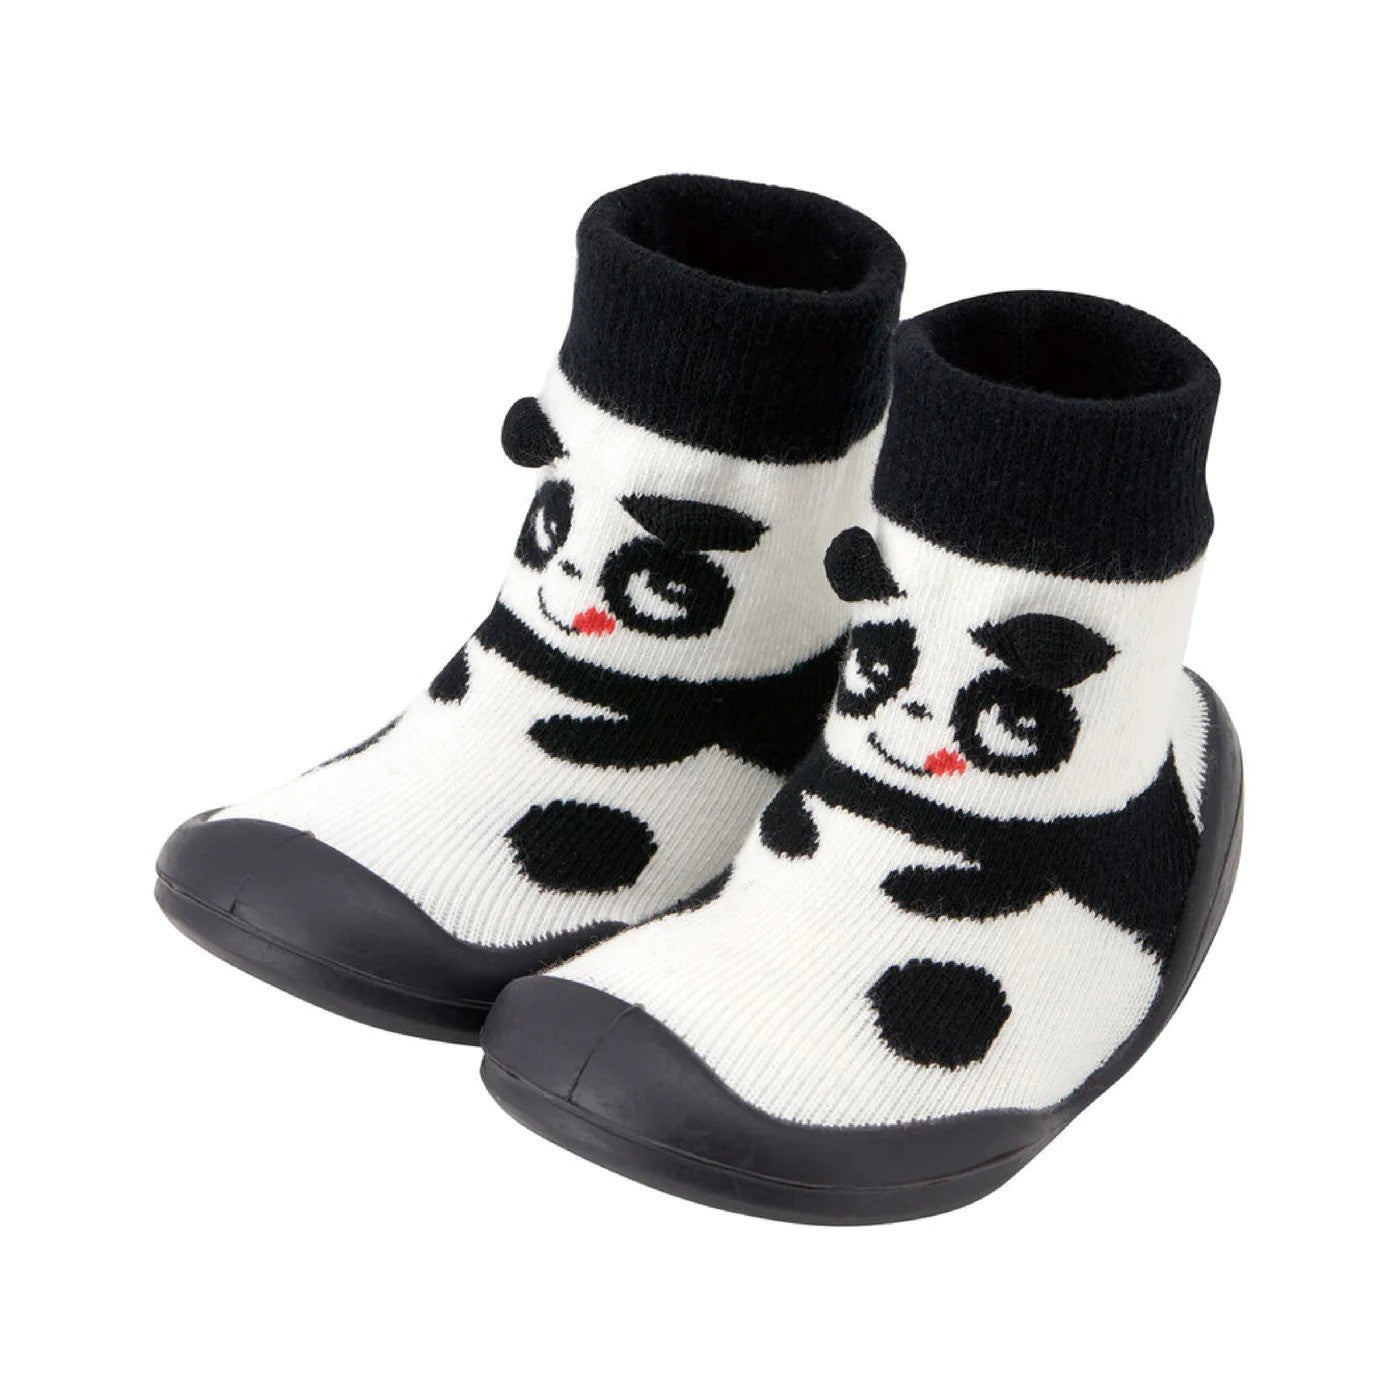 Toddler Anti Slip Socks Shoes - Panda